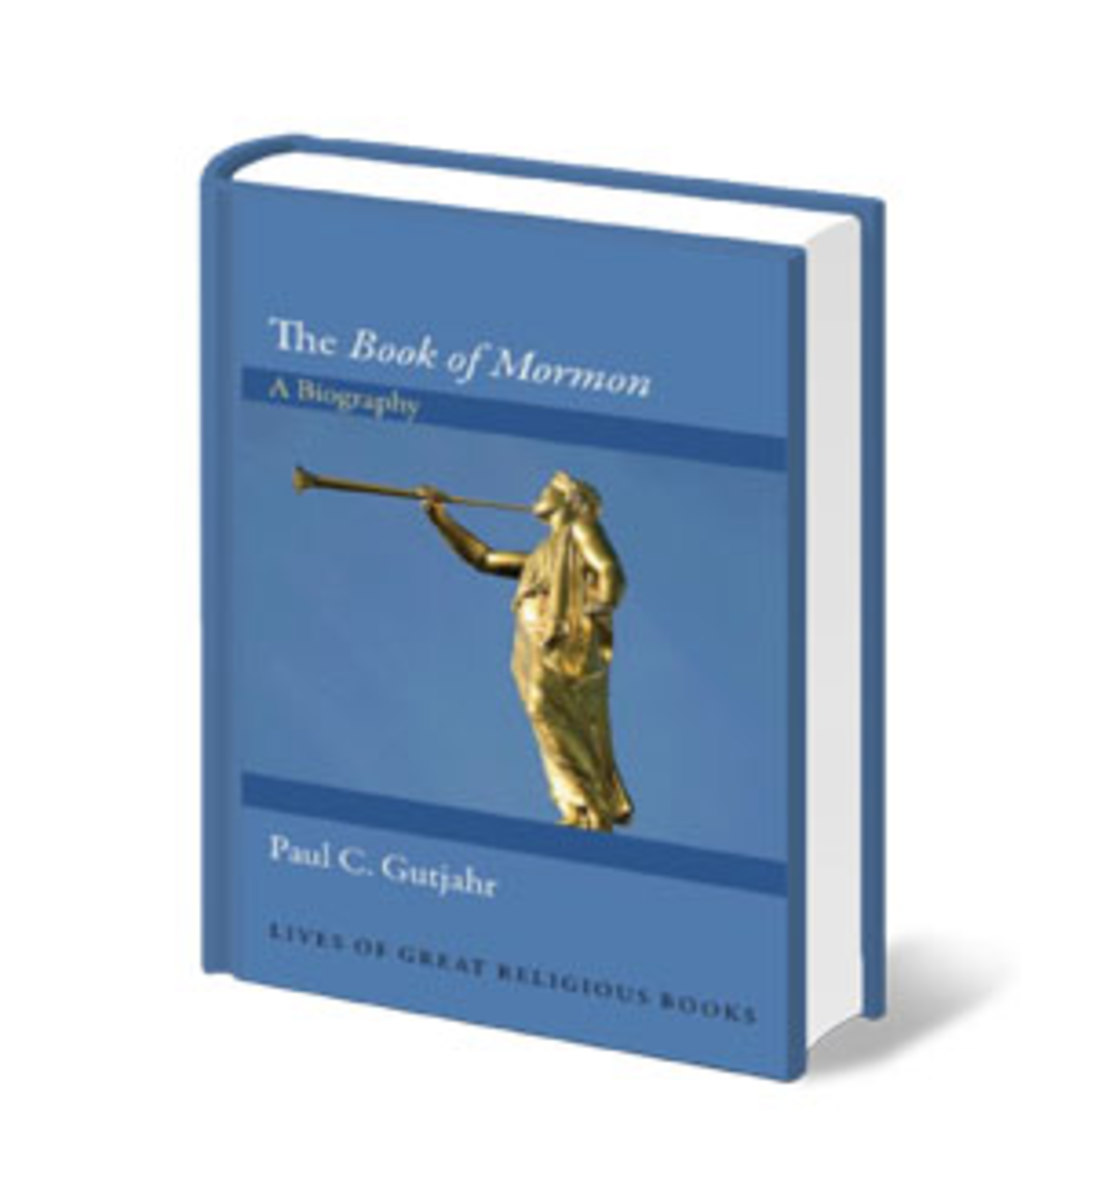 “The Book of Mormon: A Biography” by Paul C. Gutjahr, Princeton University Press, $24.95